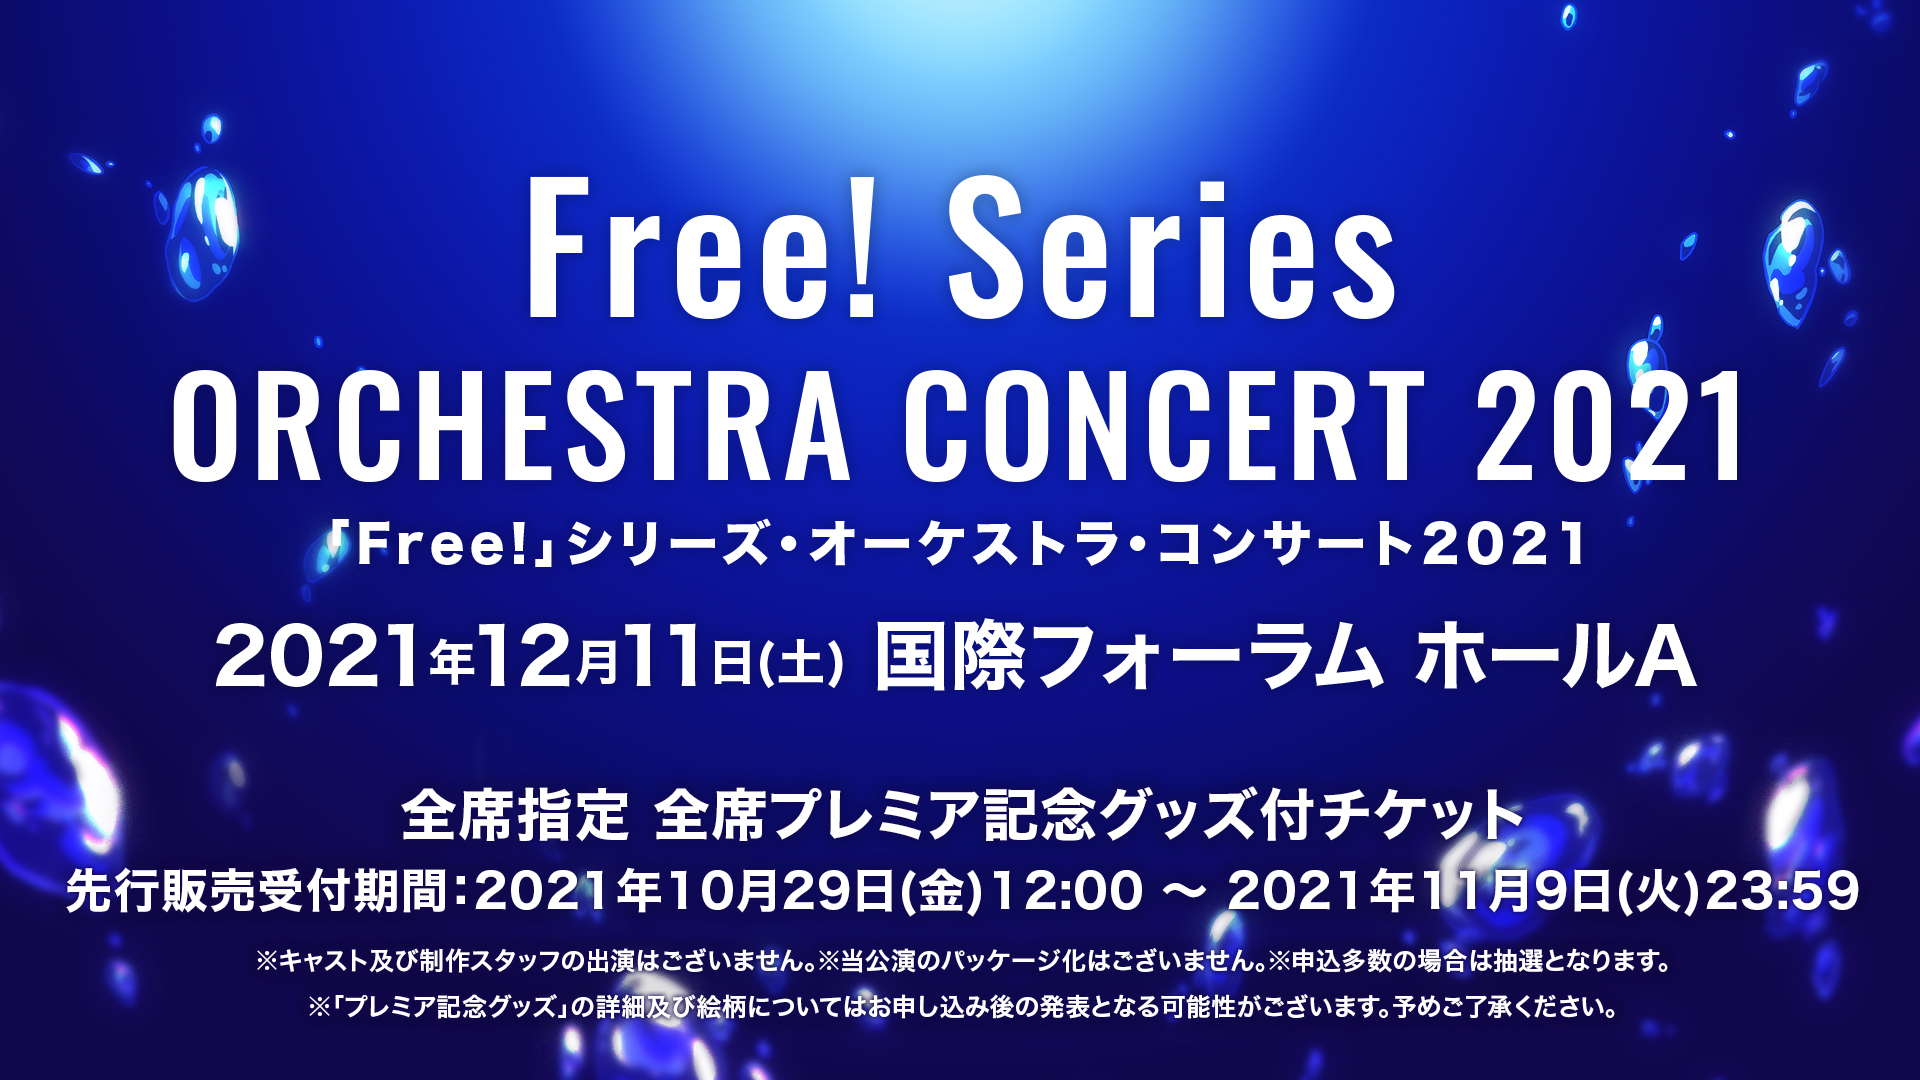 「Free!」シリーズ オーケストラコンサート2021 ティザービジュアル